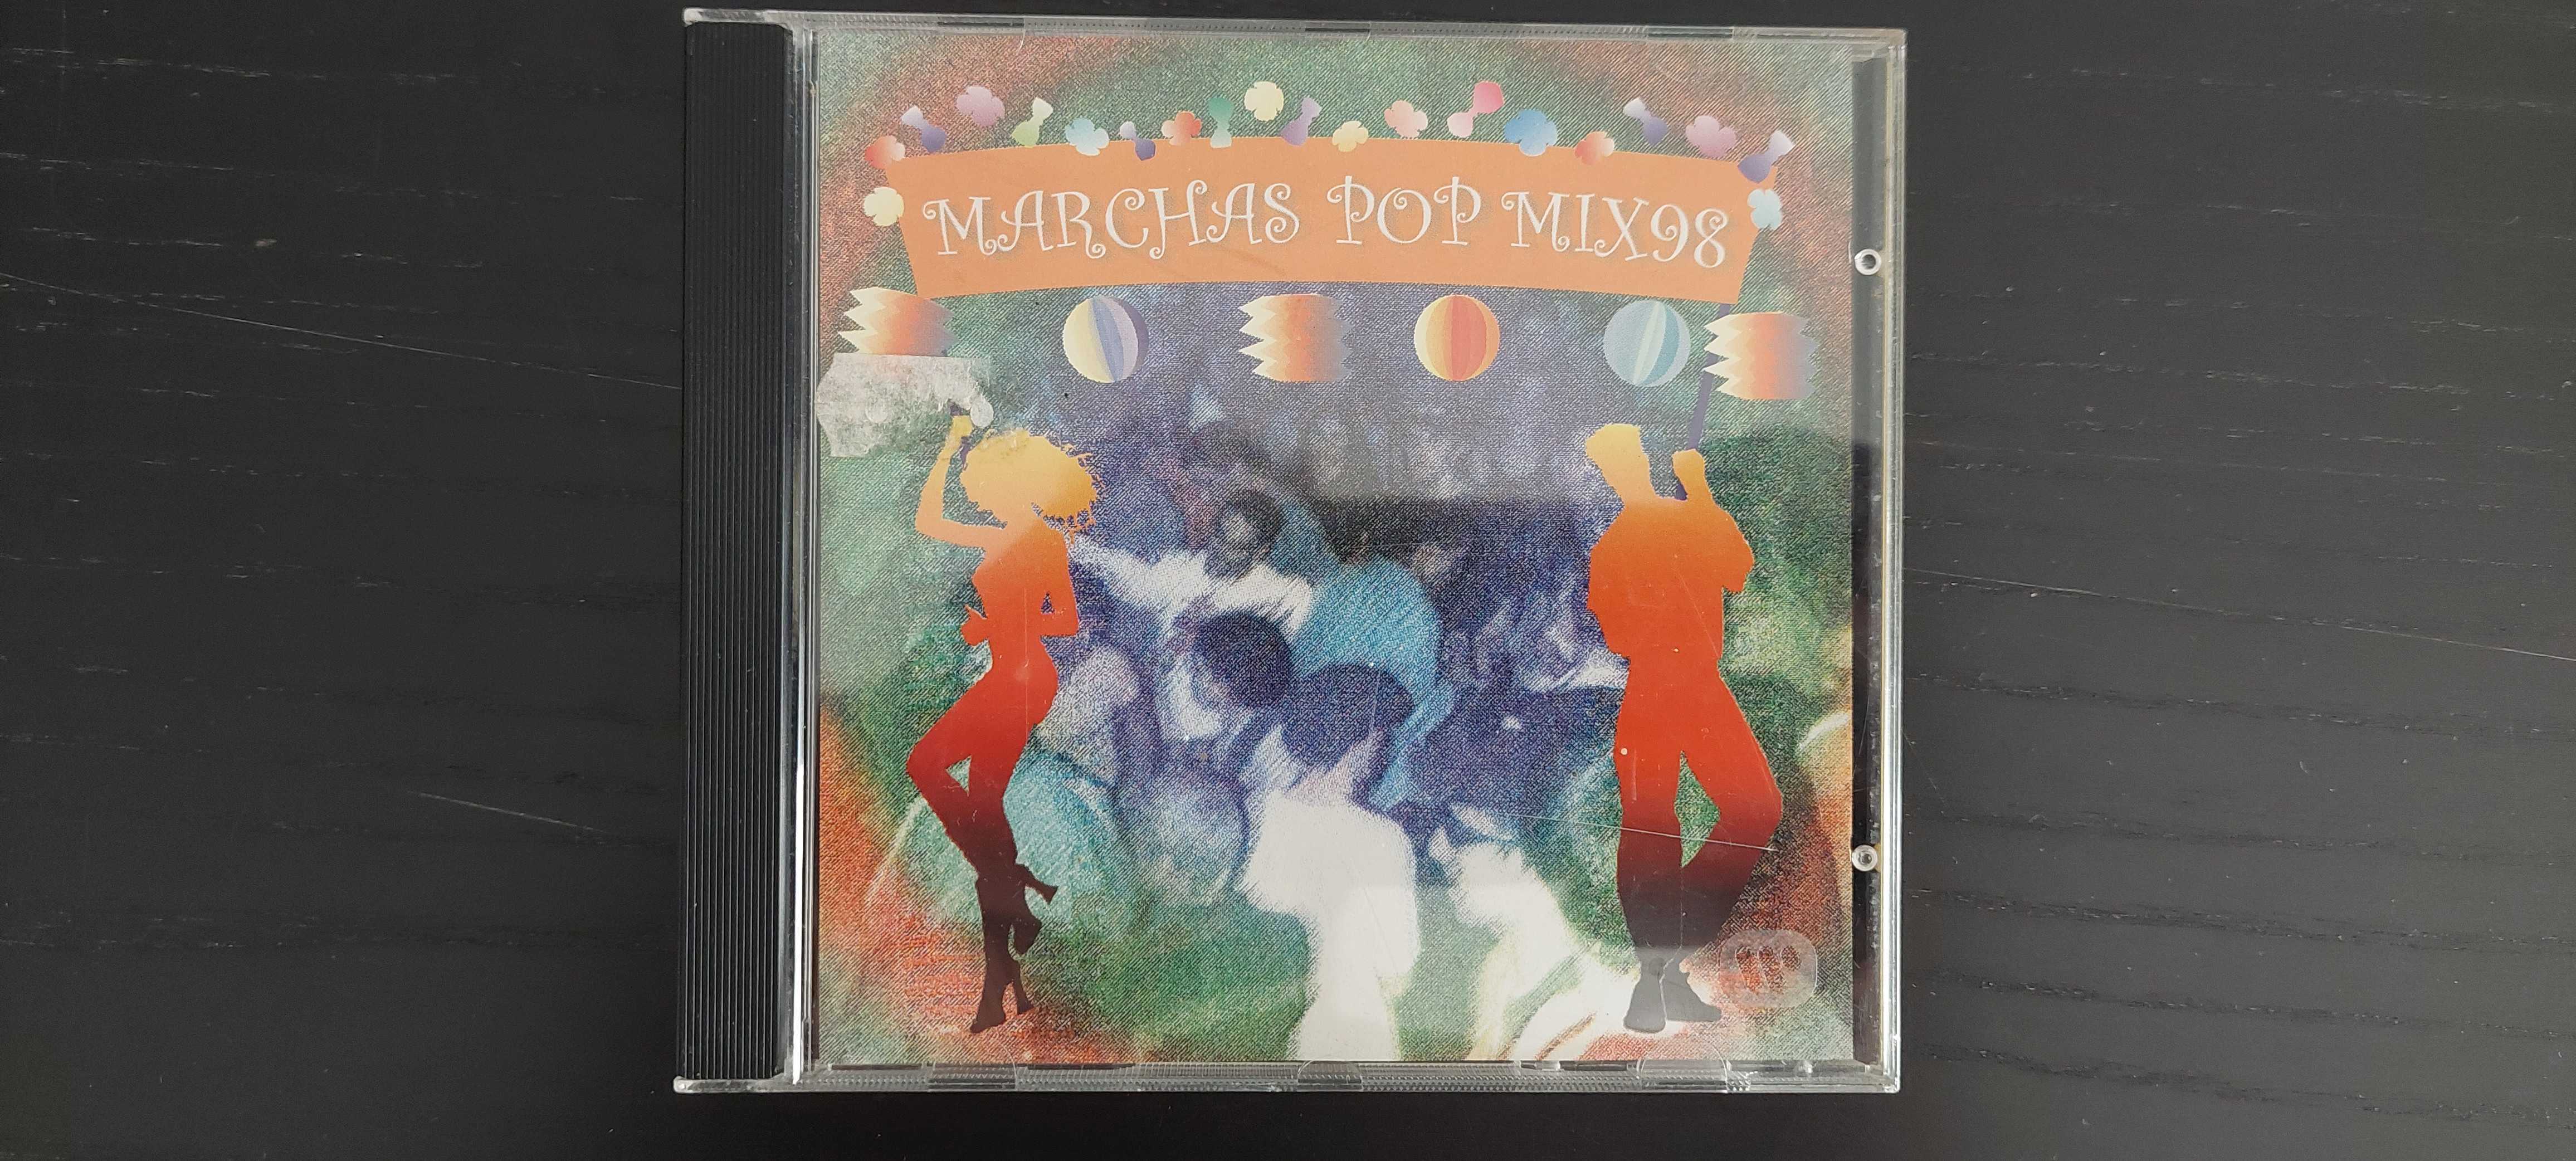 CD Original Marchas pop mix 98